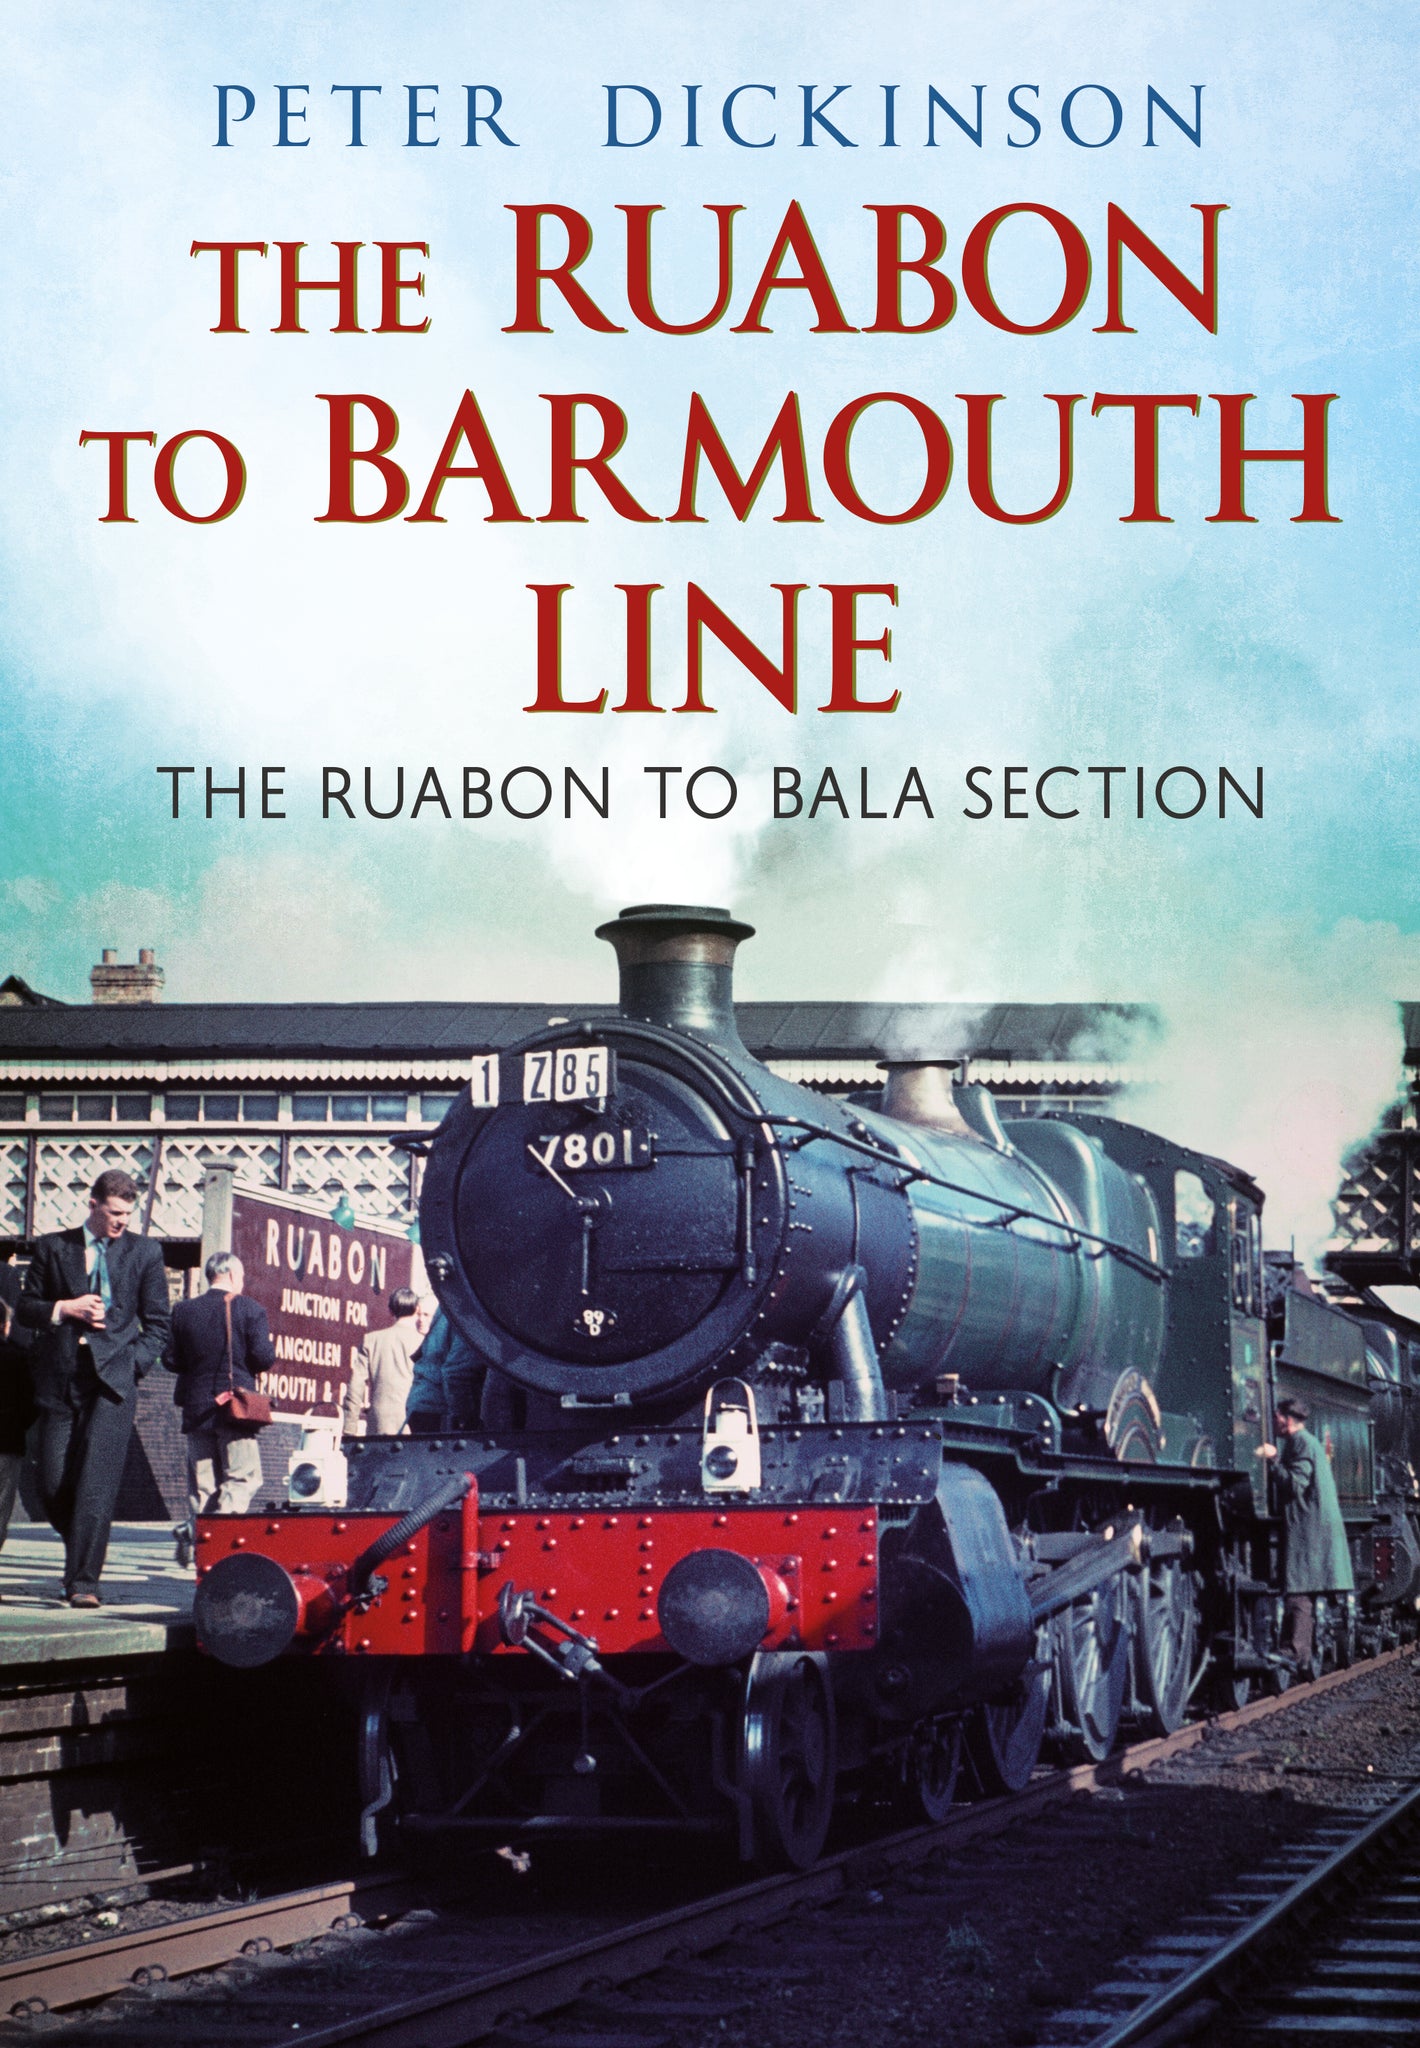 The Ruabon to Barmouth Line: The Ruabon to Bala Section